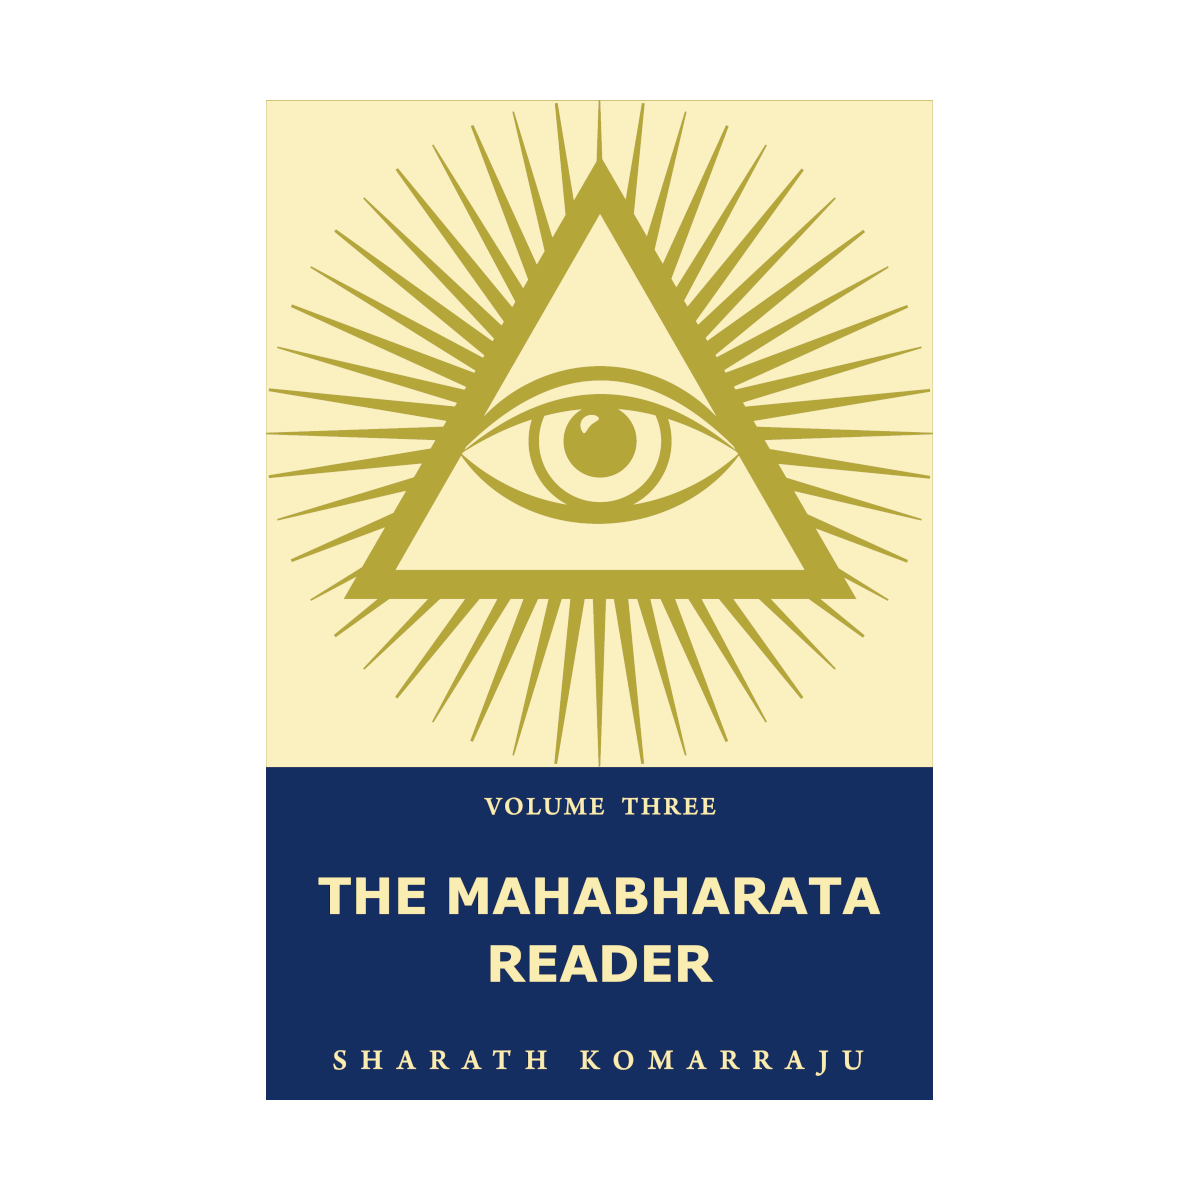 The Mahabharata Reader: Volume Three